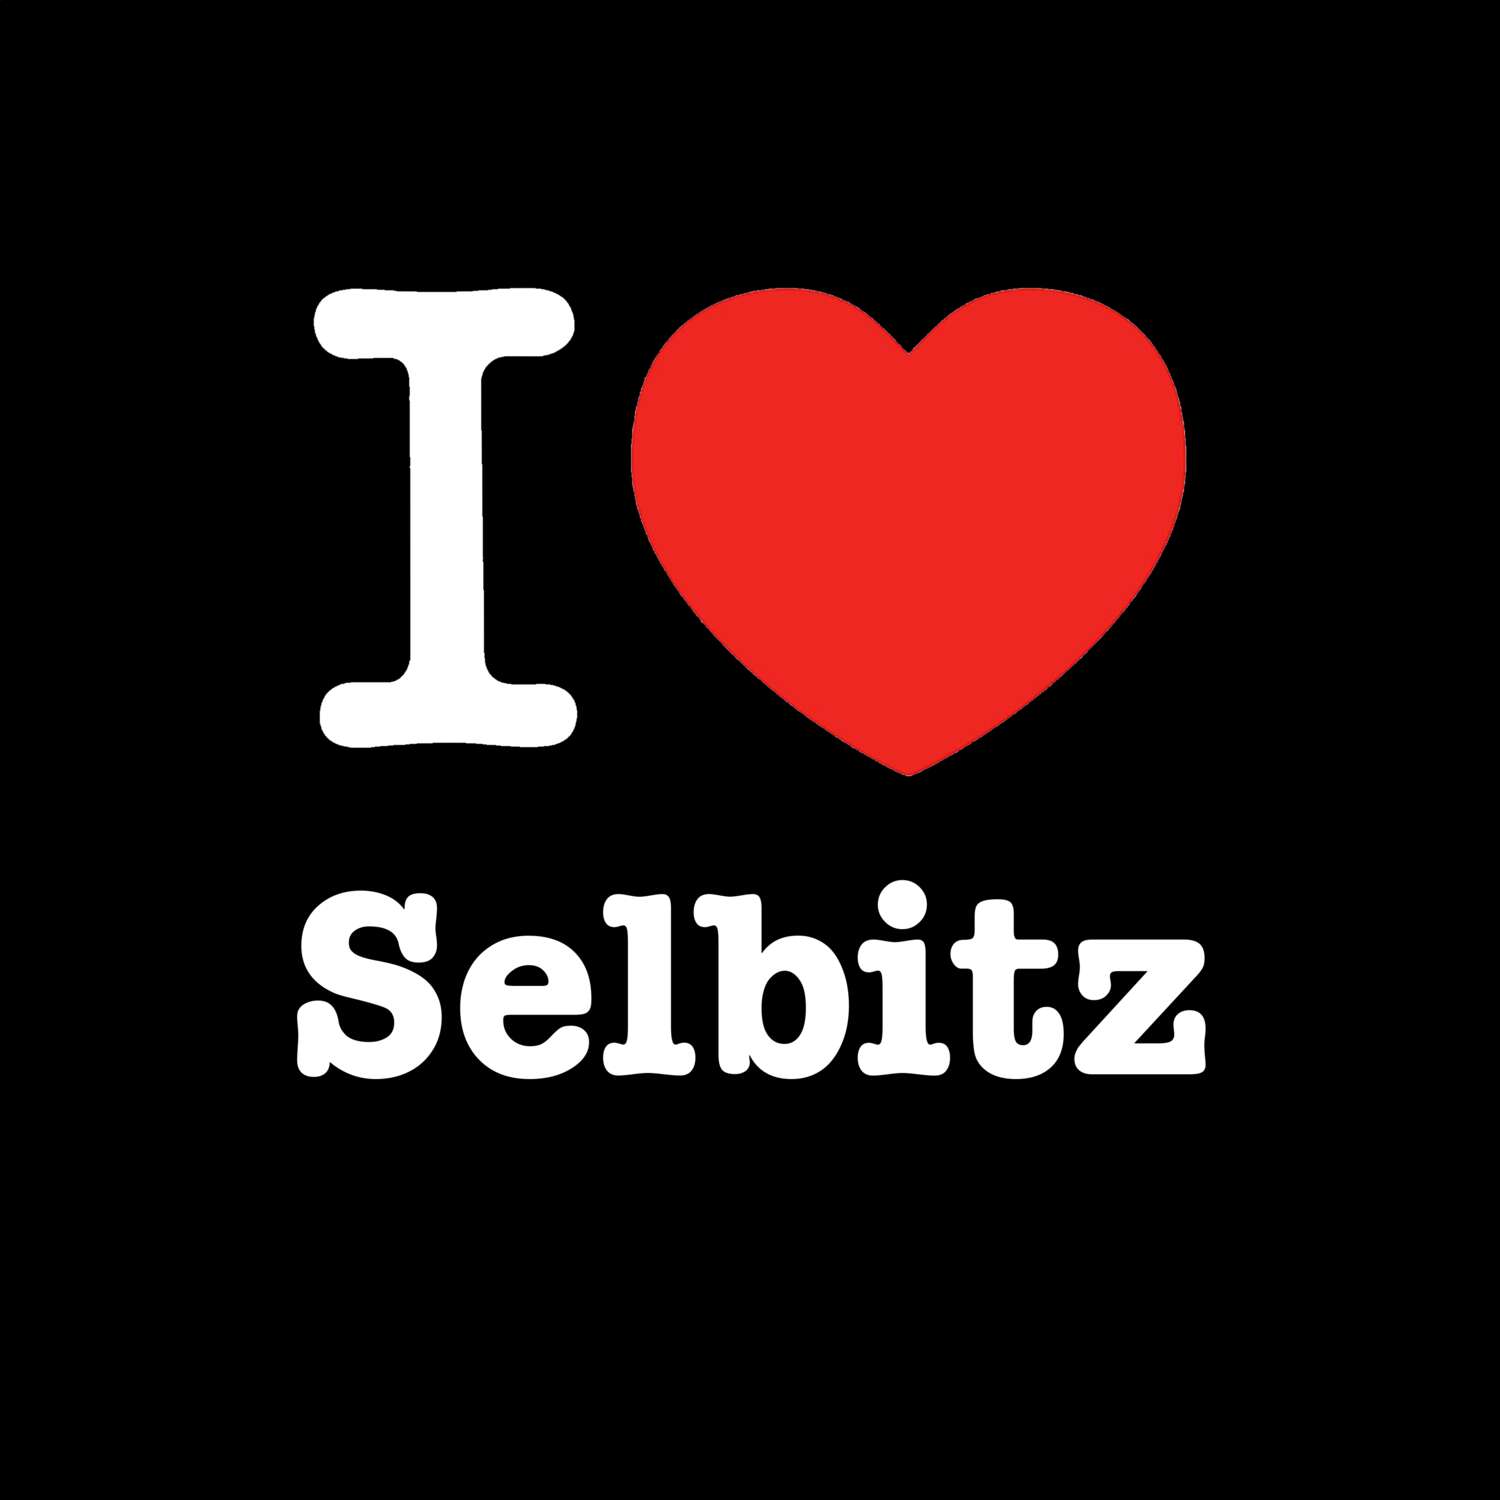 Selbitz T-Shirt »I love«